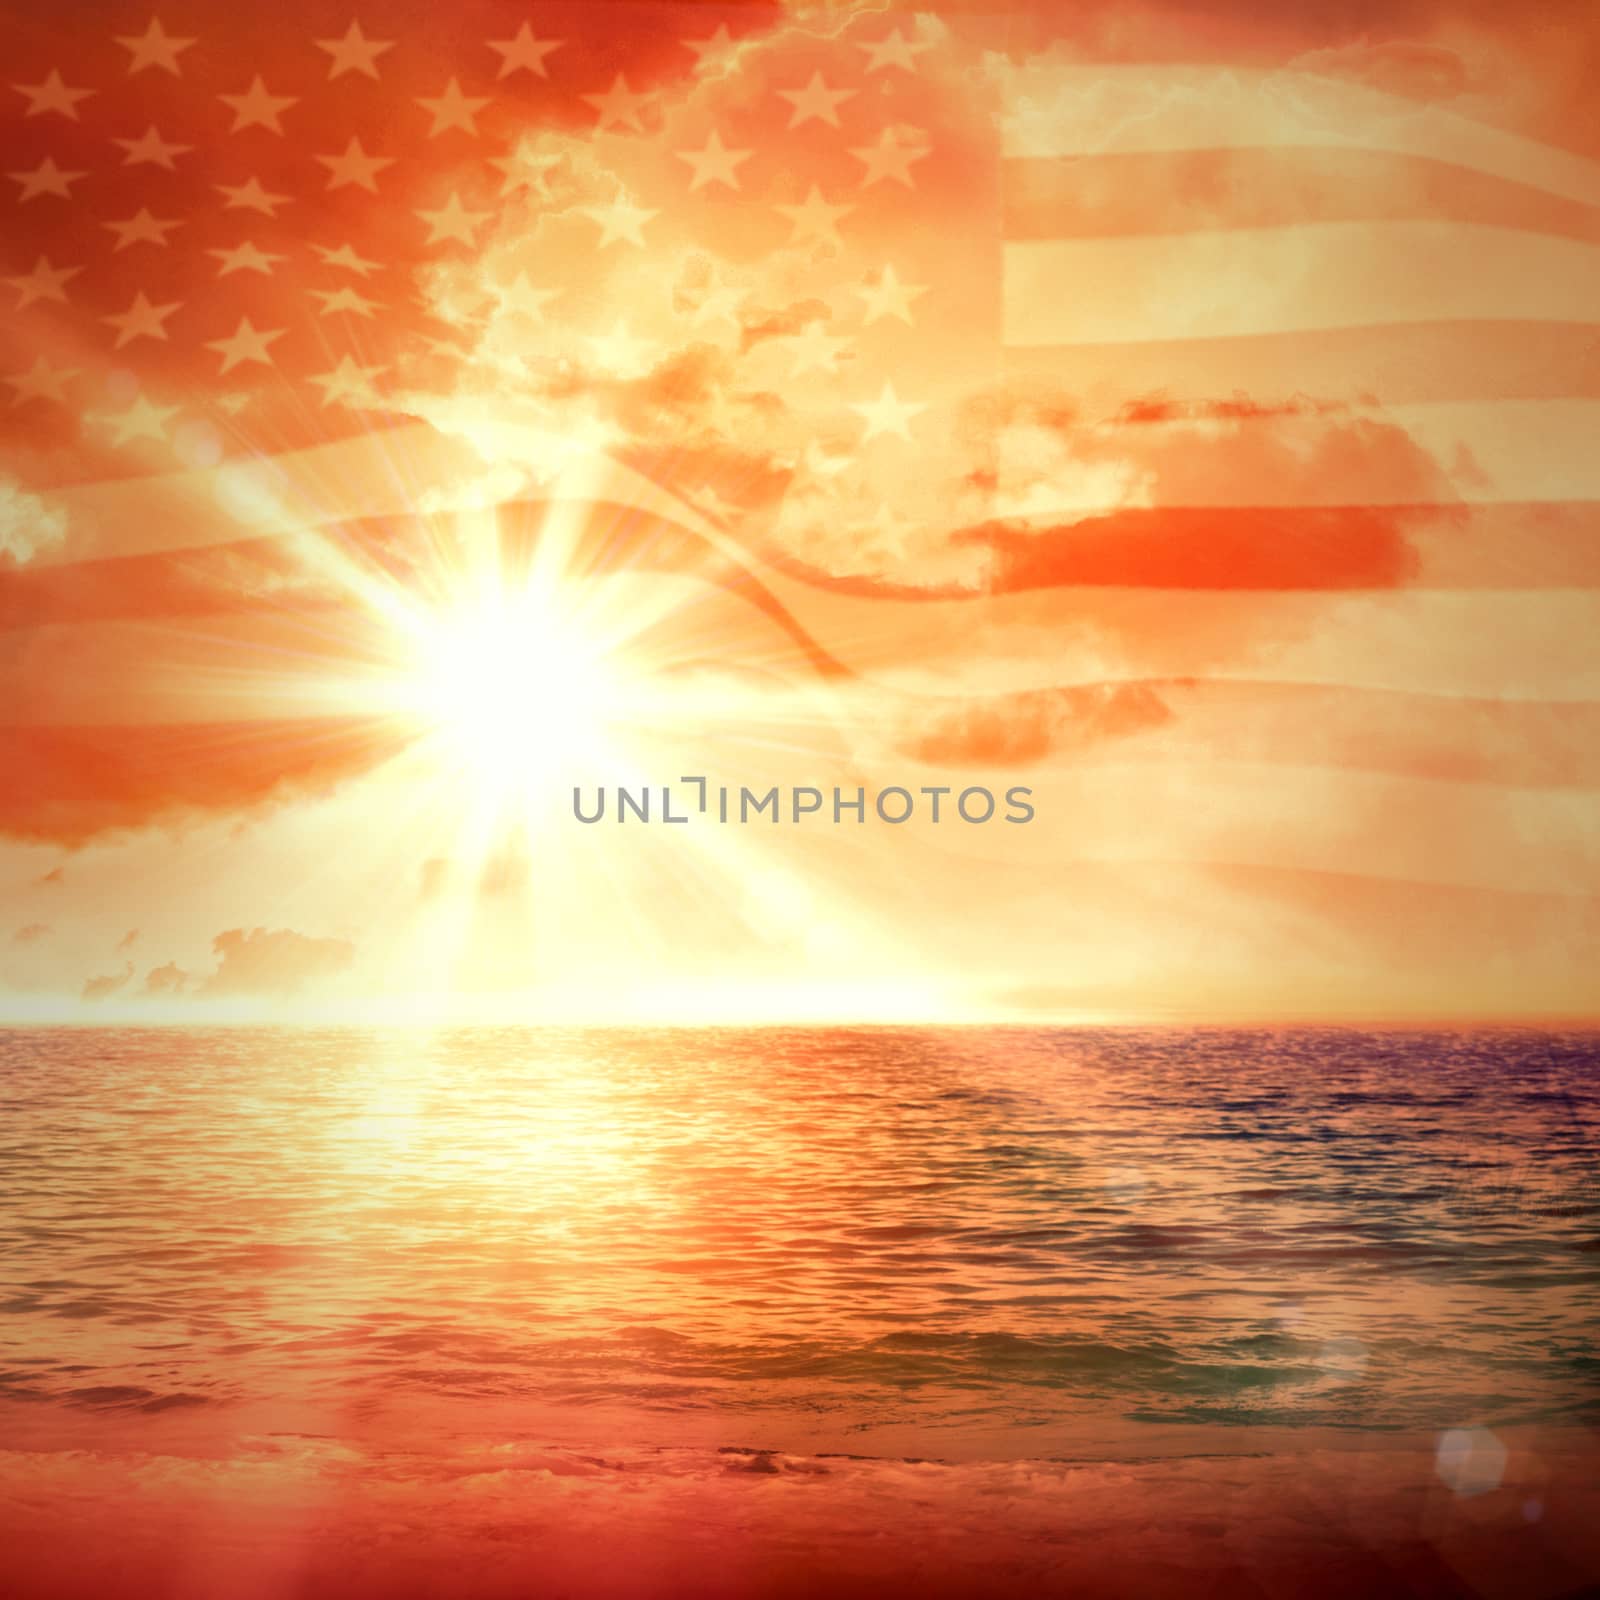 Digitally generated united states national flag against sunrise over magical sea